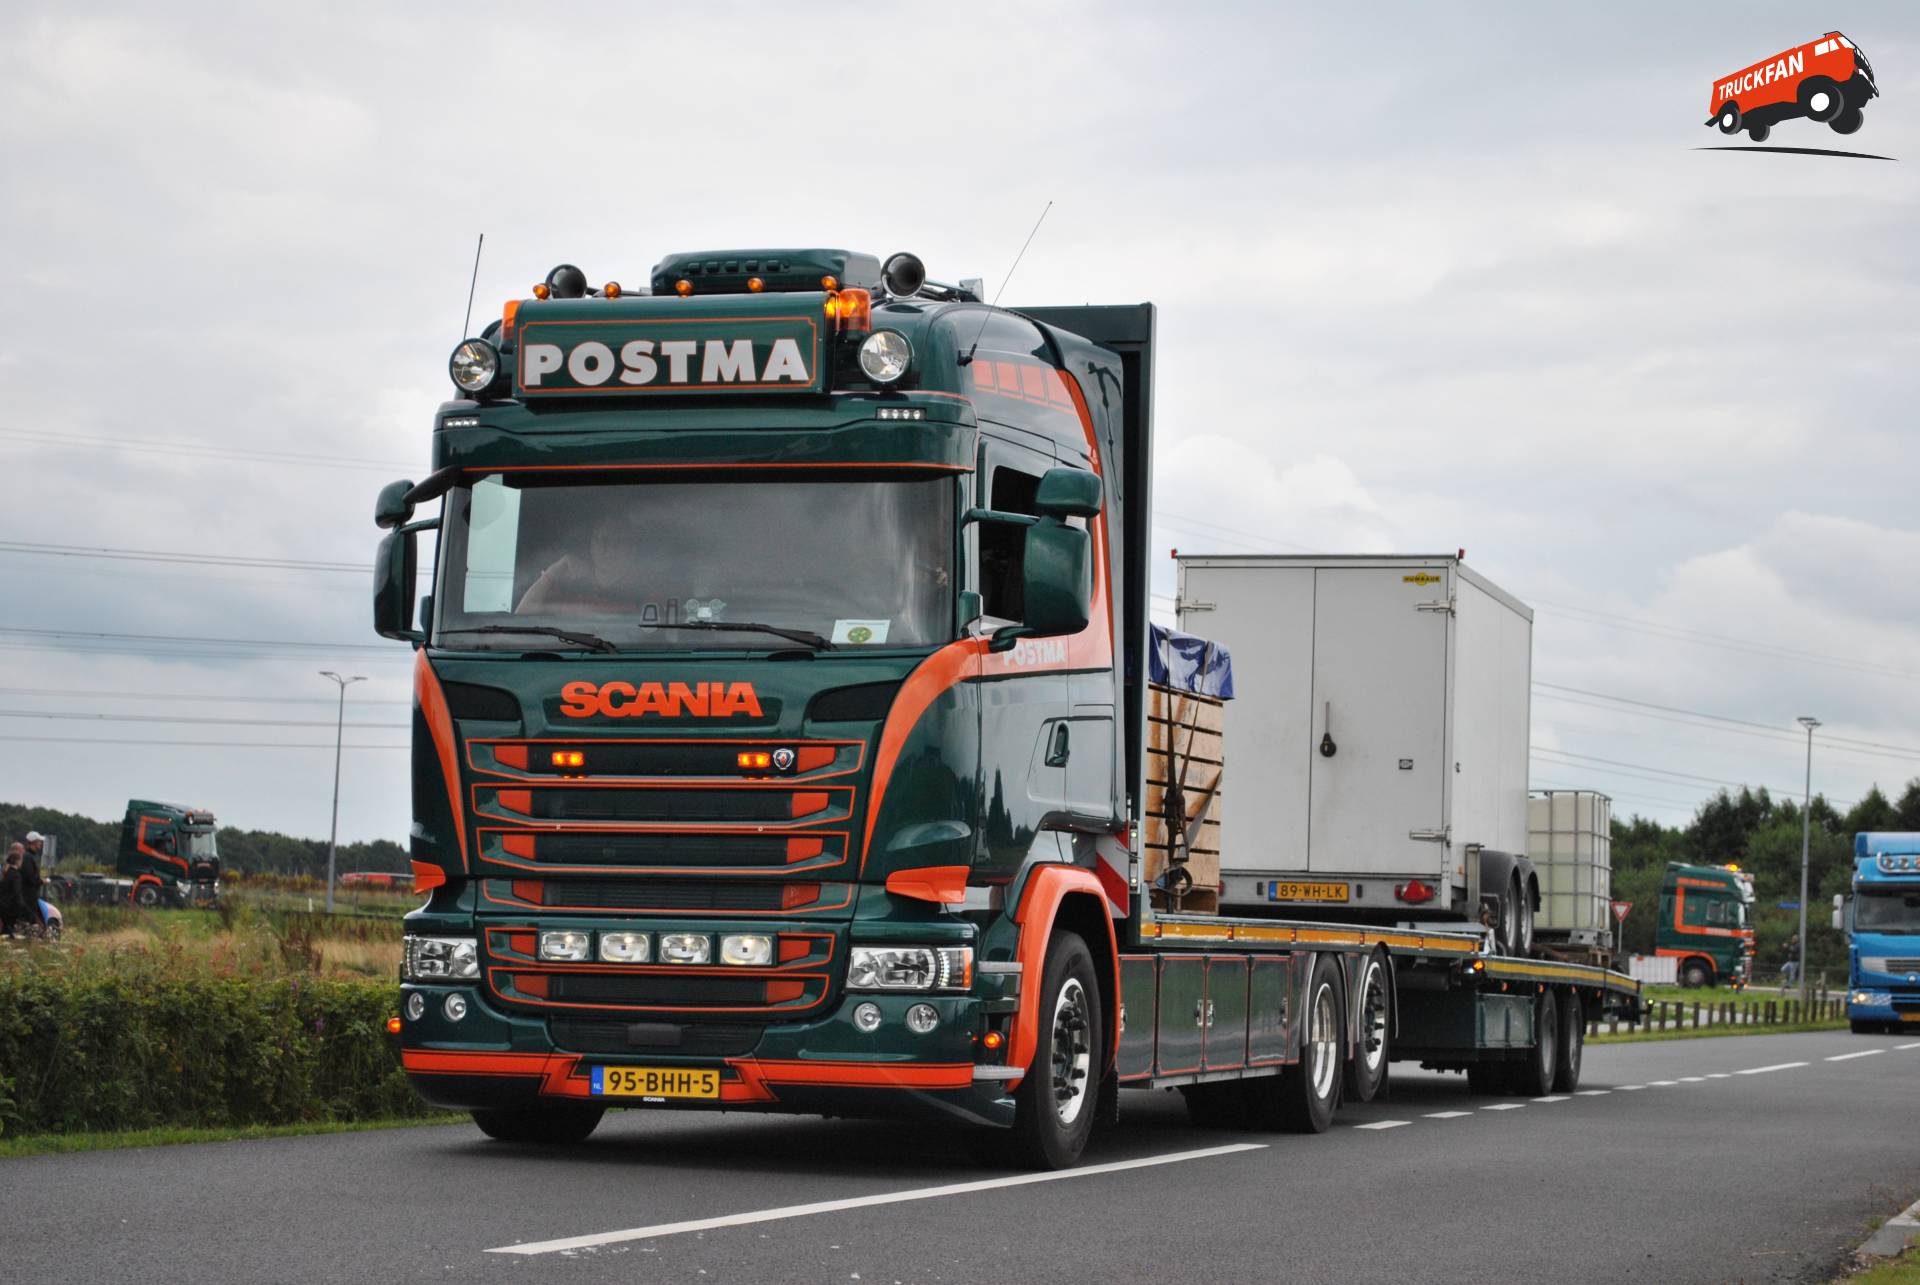 Foto Vrachtwagen Scania Van K J Postma TruckFan